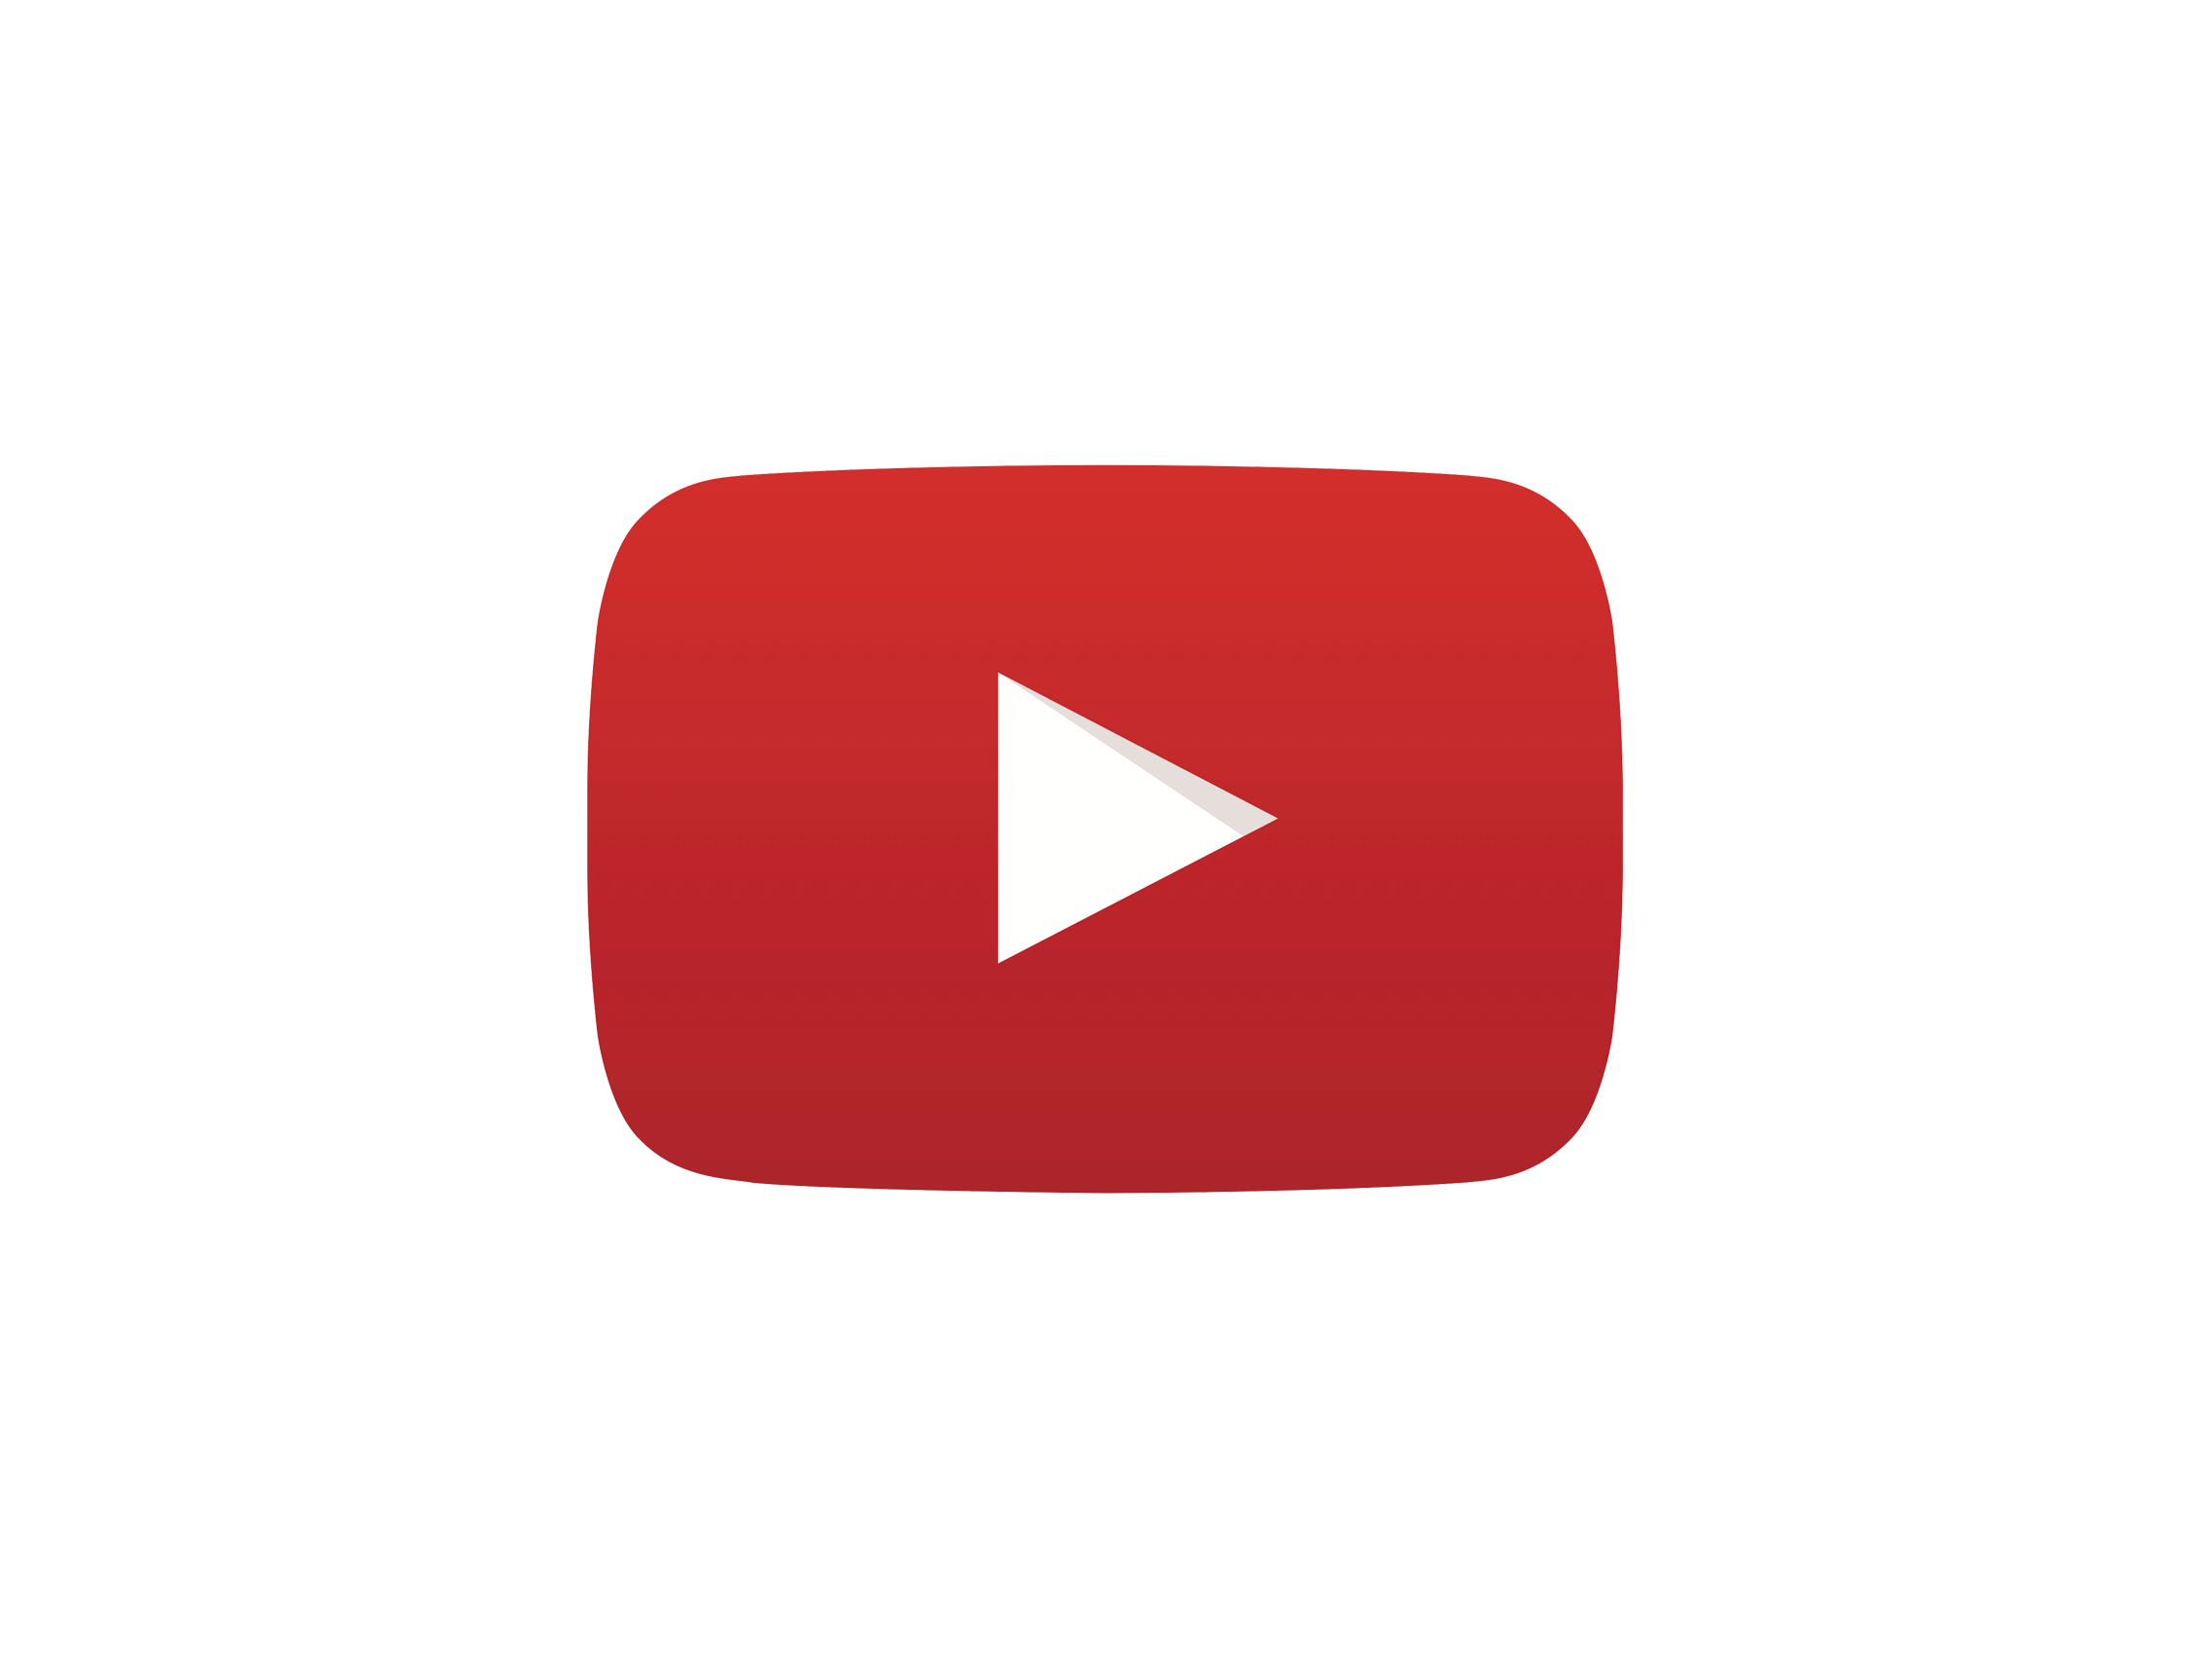 Jacob Collier on YouTube